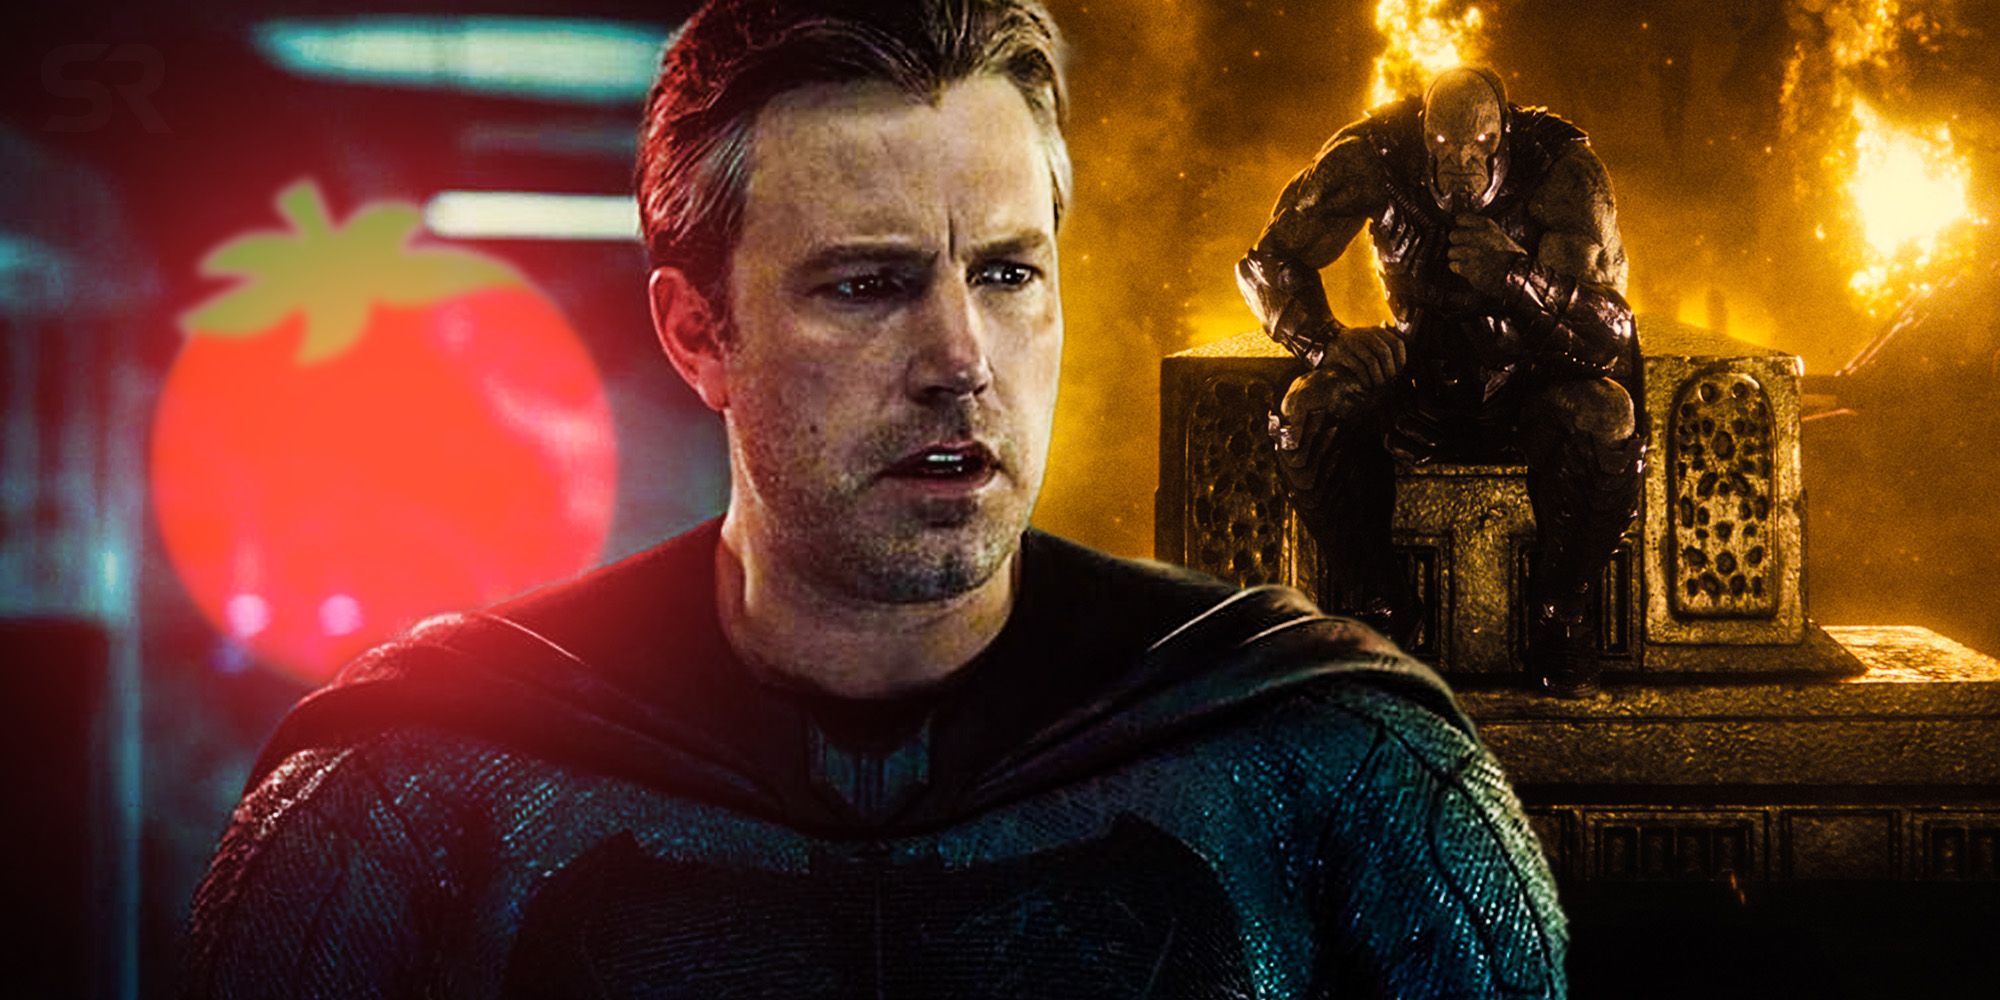 Ben Affleck Batman Darkseid Justice league snyder cut reviews positive